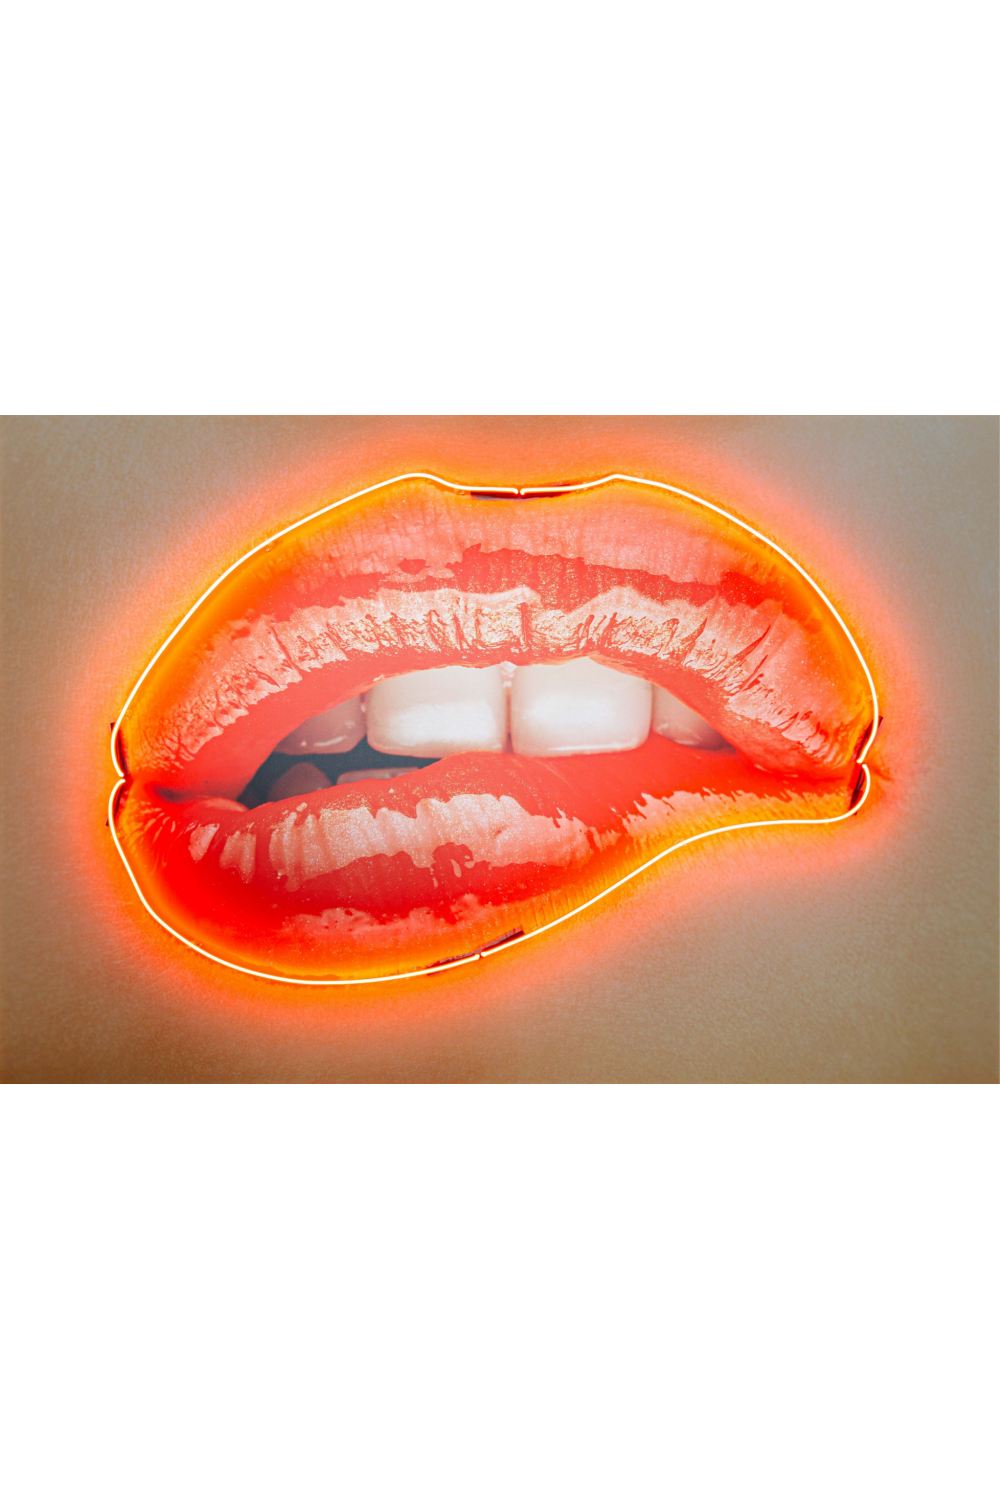 Mouth Urban Neon Artwork | Andrew Martin Lips Seduction | Oroa.com